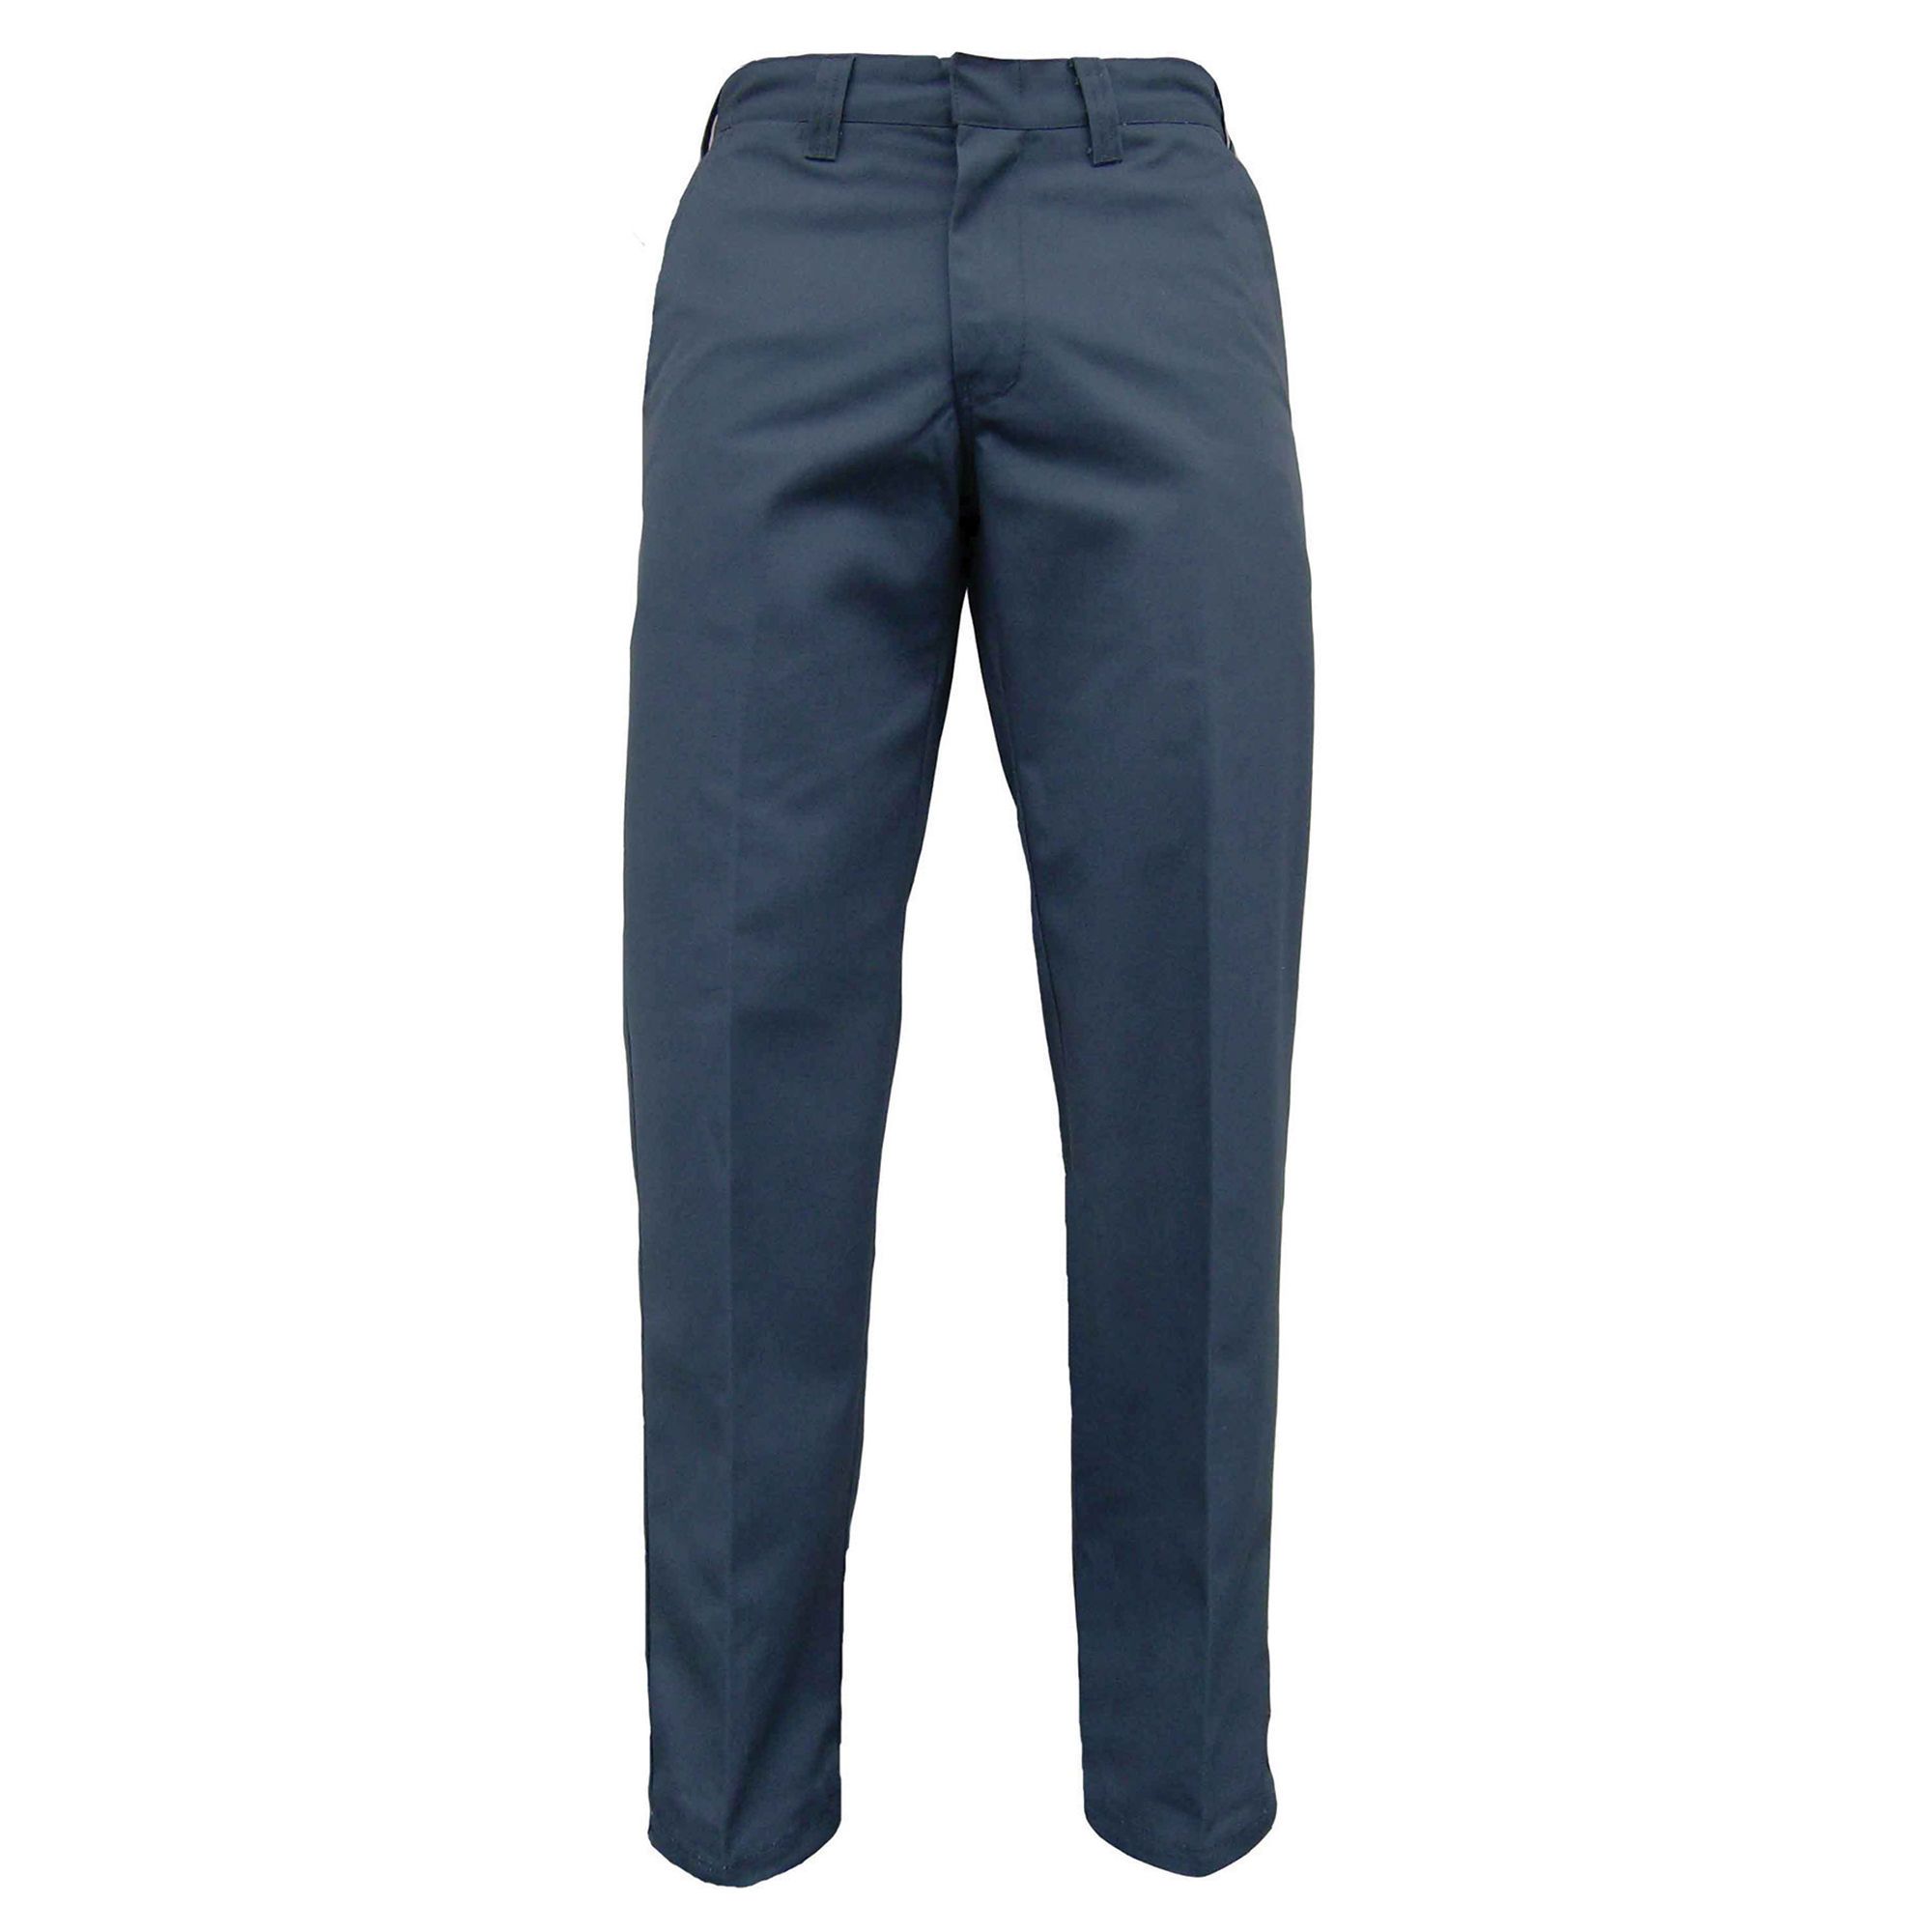 Fleece Lined Pants - Blue - Size 32/32